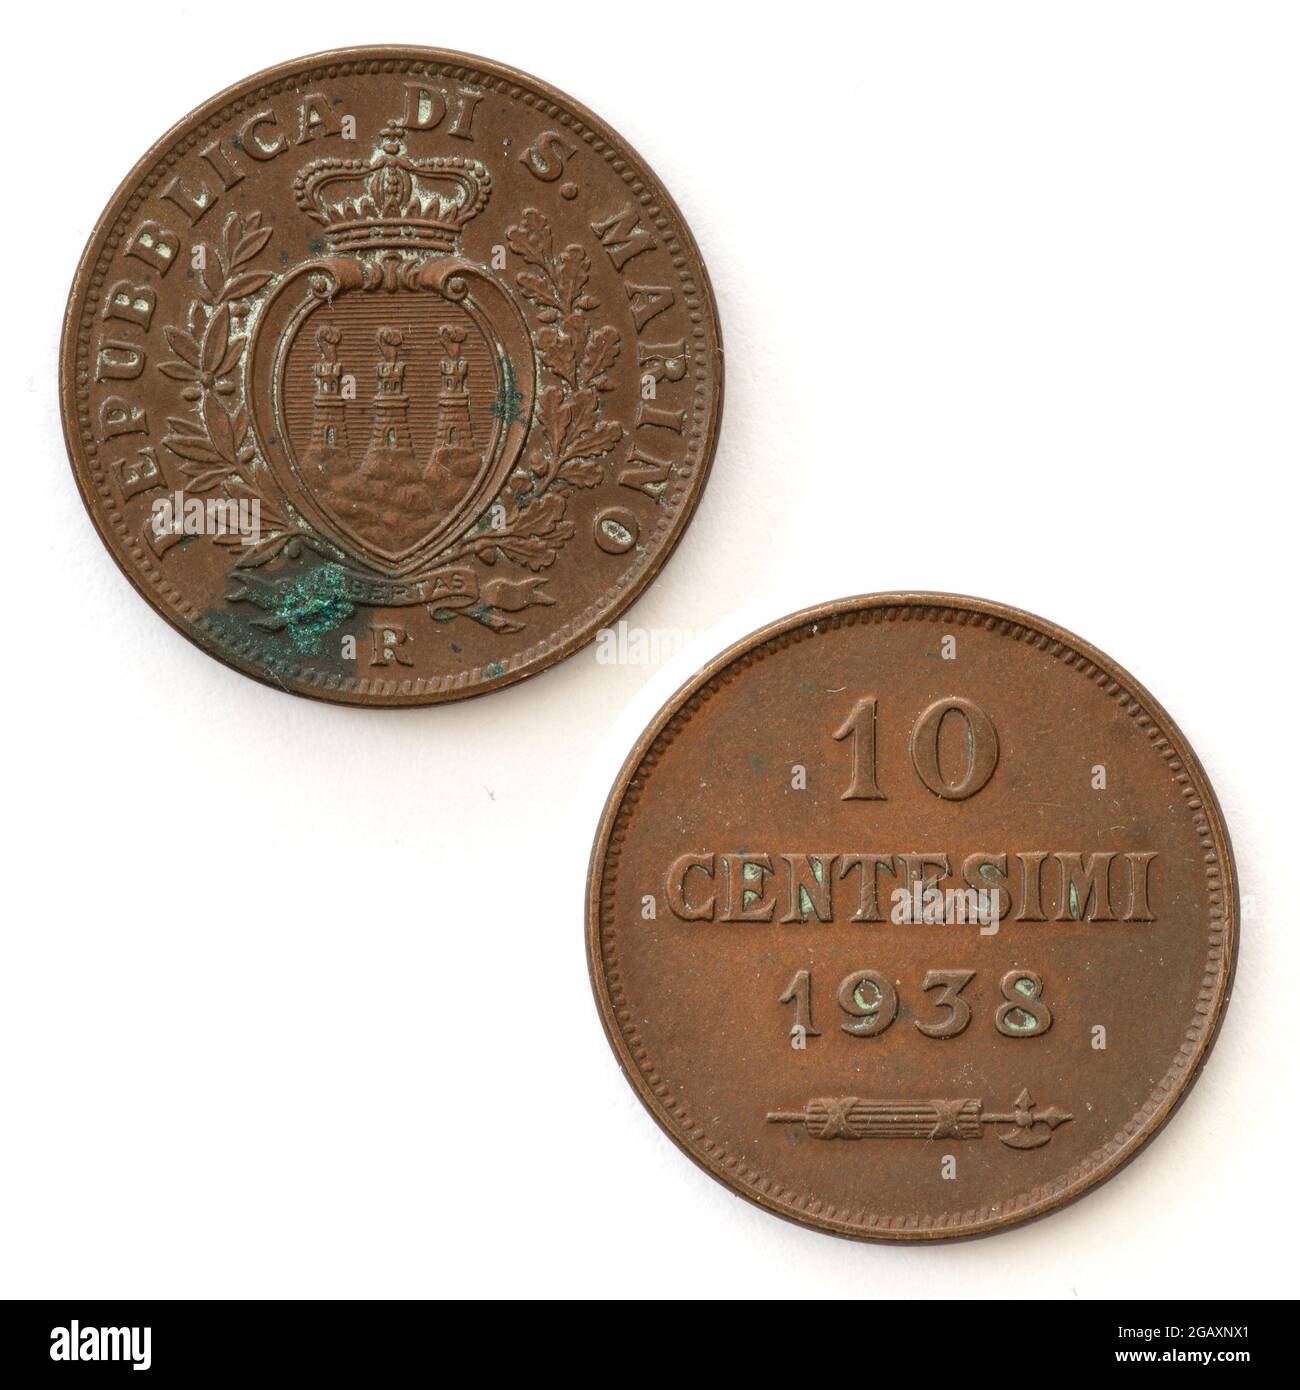 San Marino 10 Centesimi Coin -1938 Stock Photo